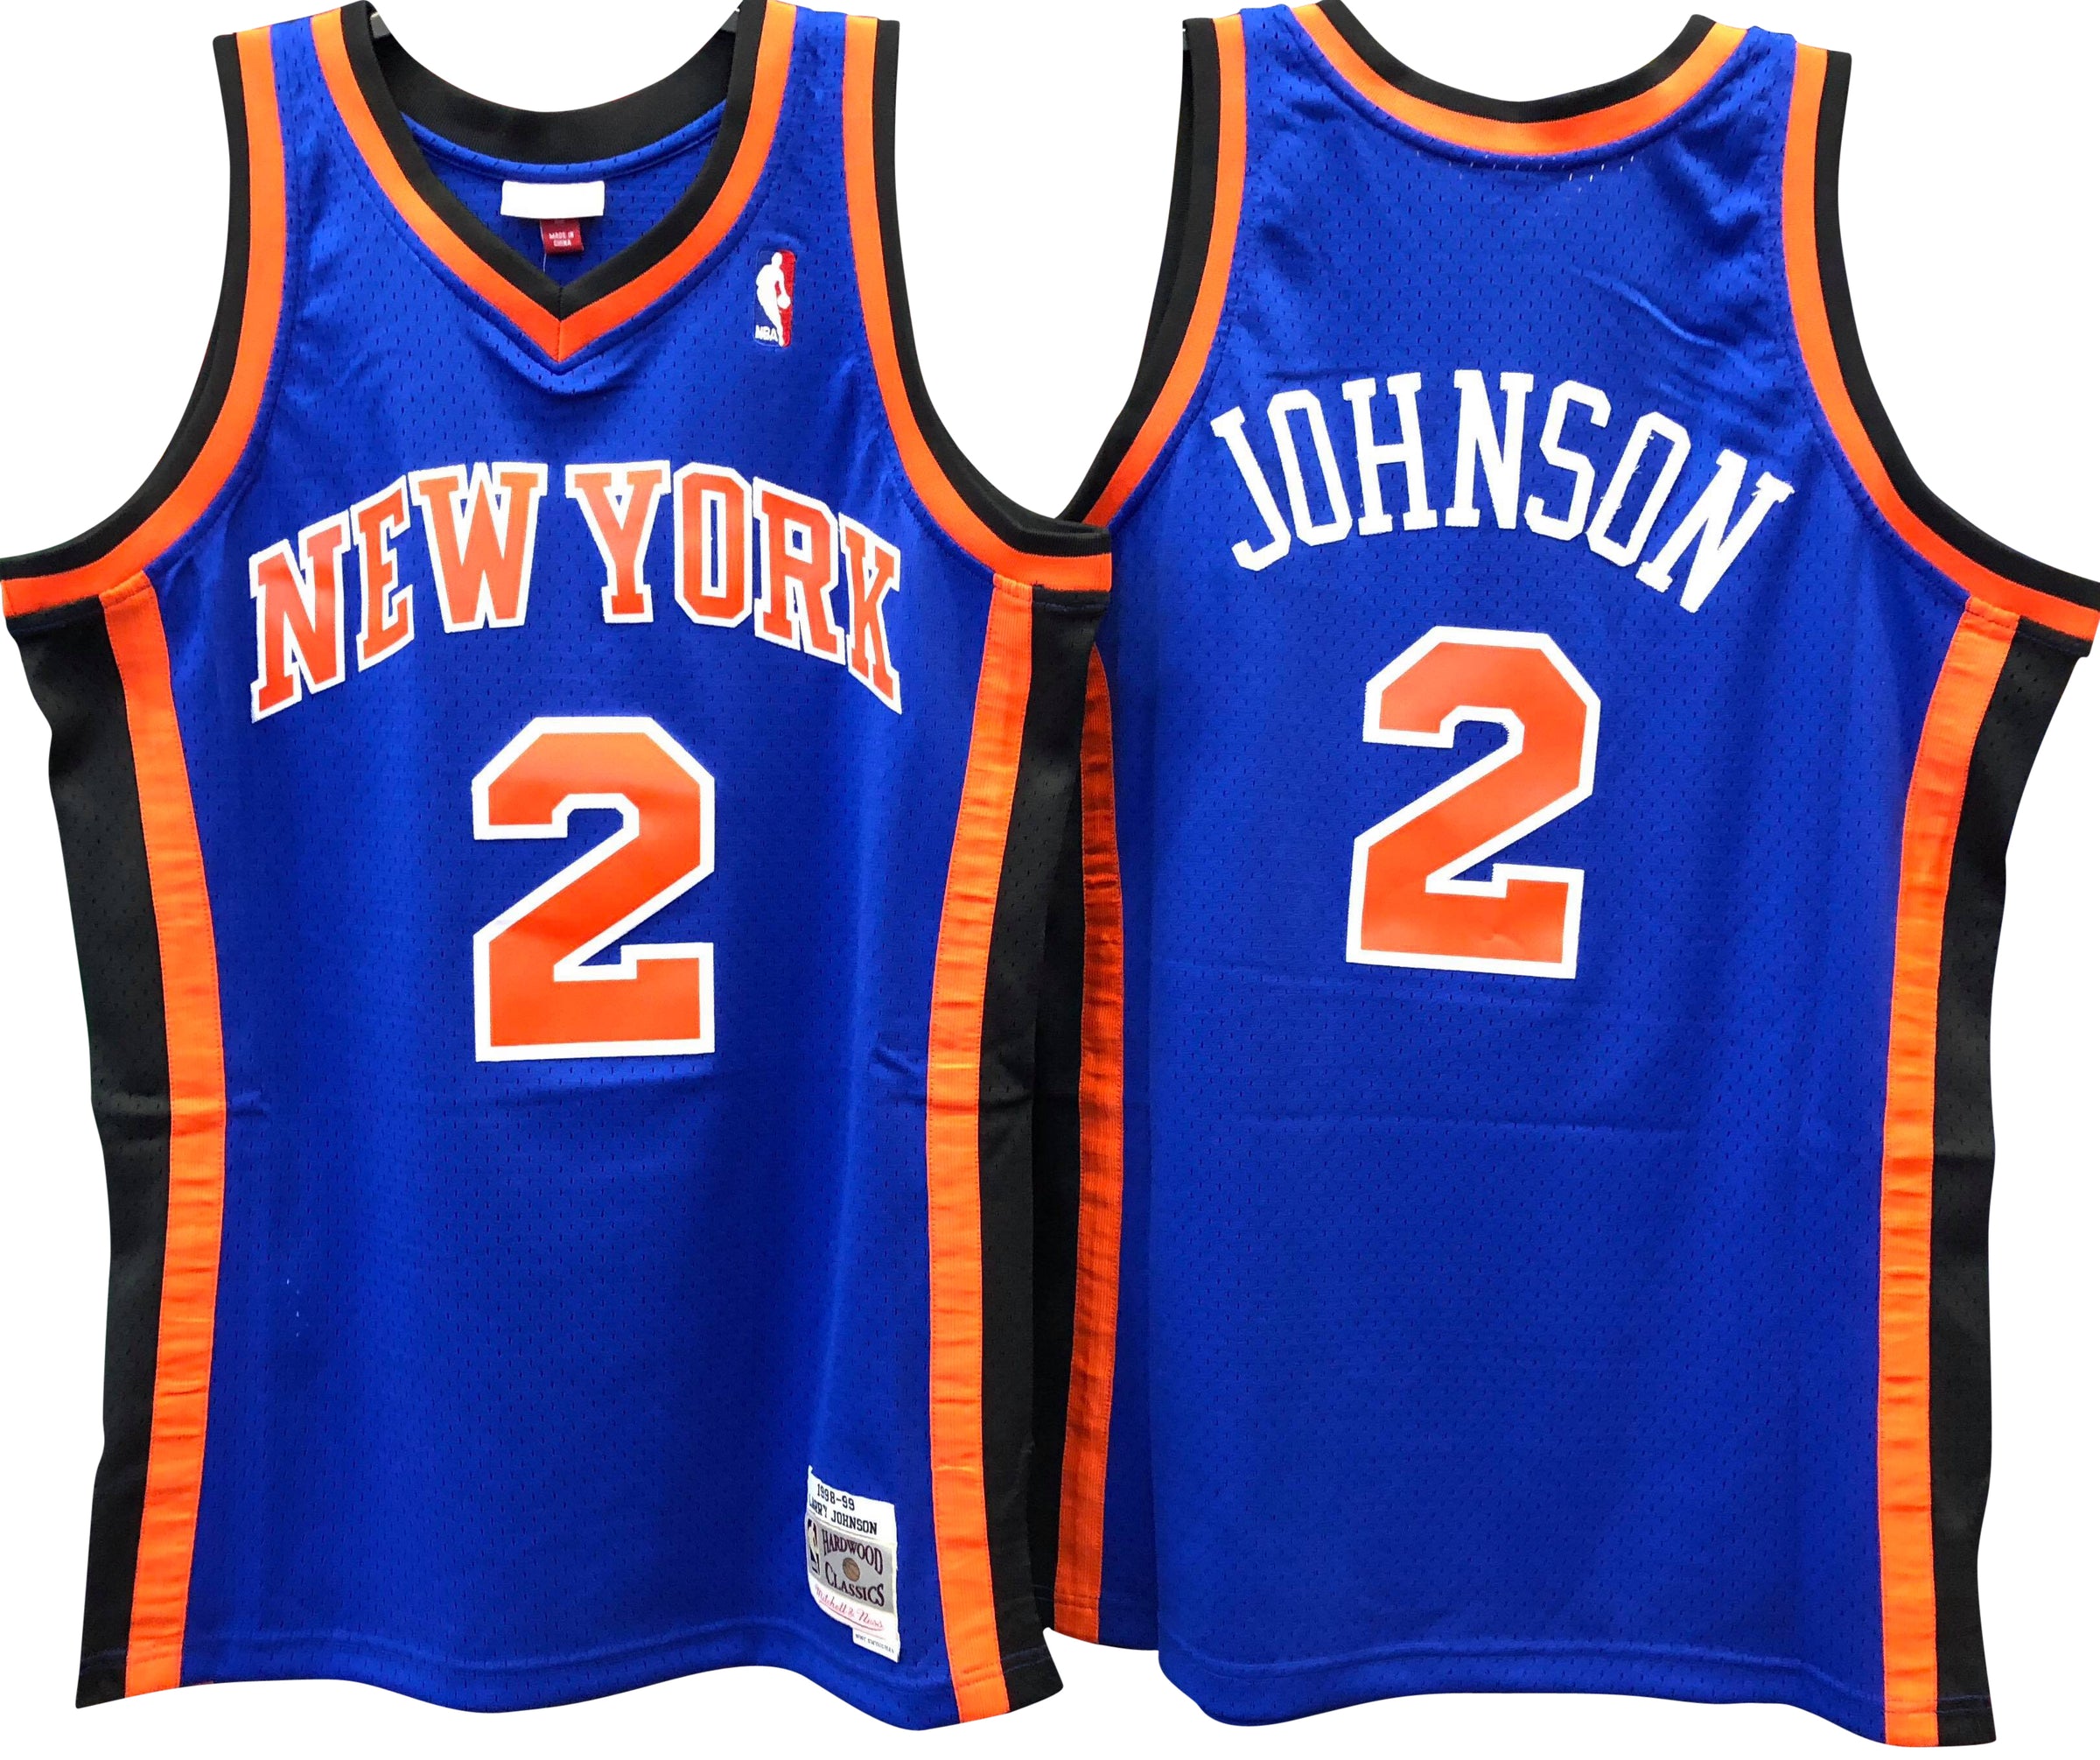 Larry Johnson New York Knicks Hardwood 